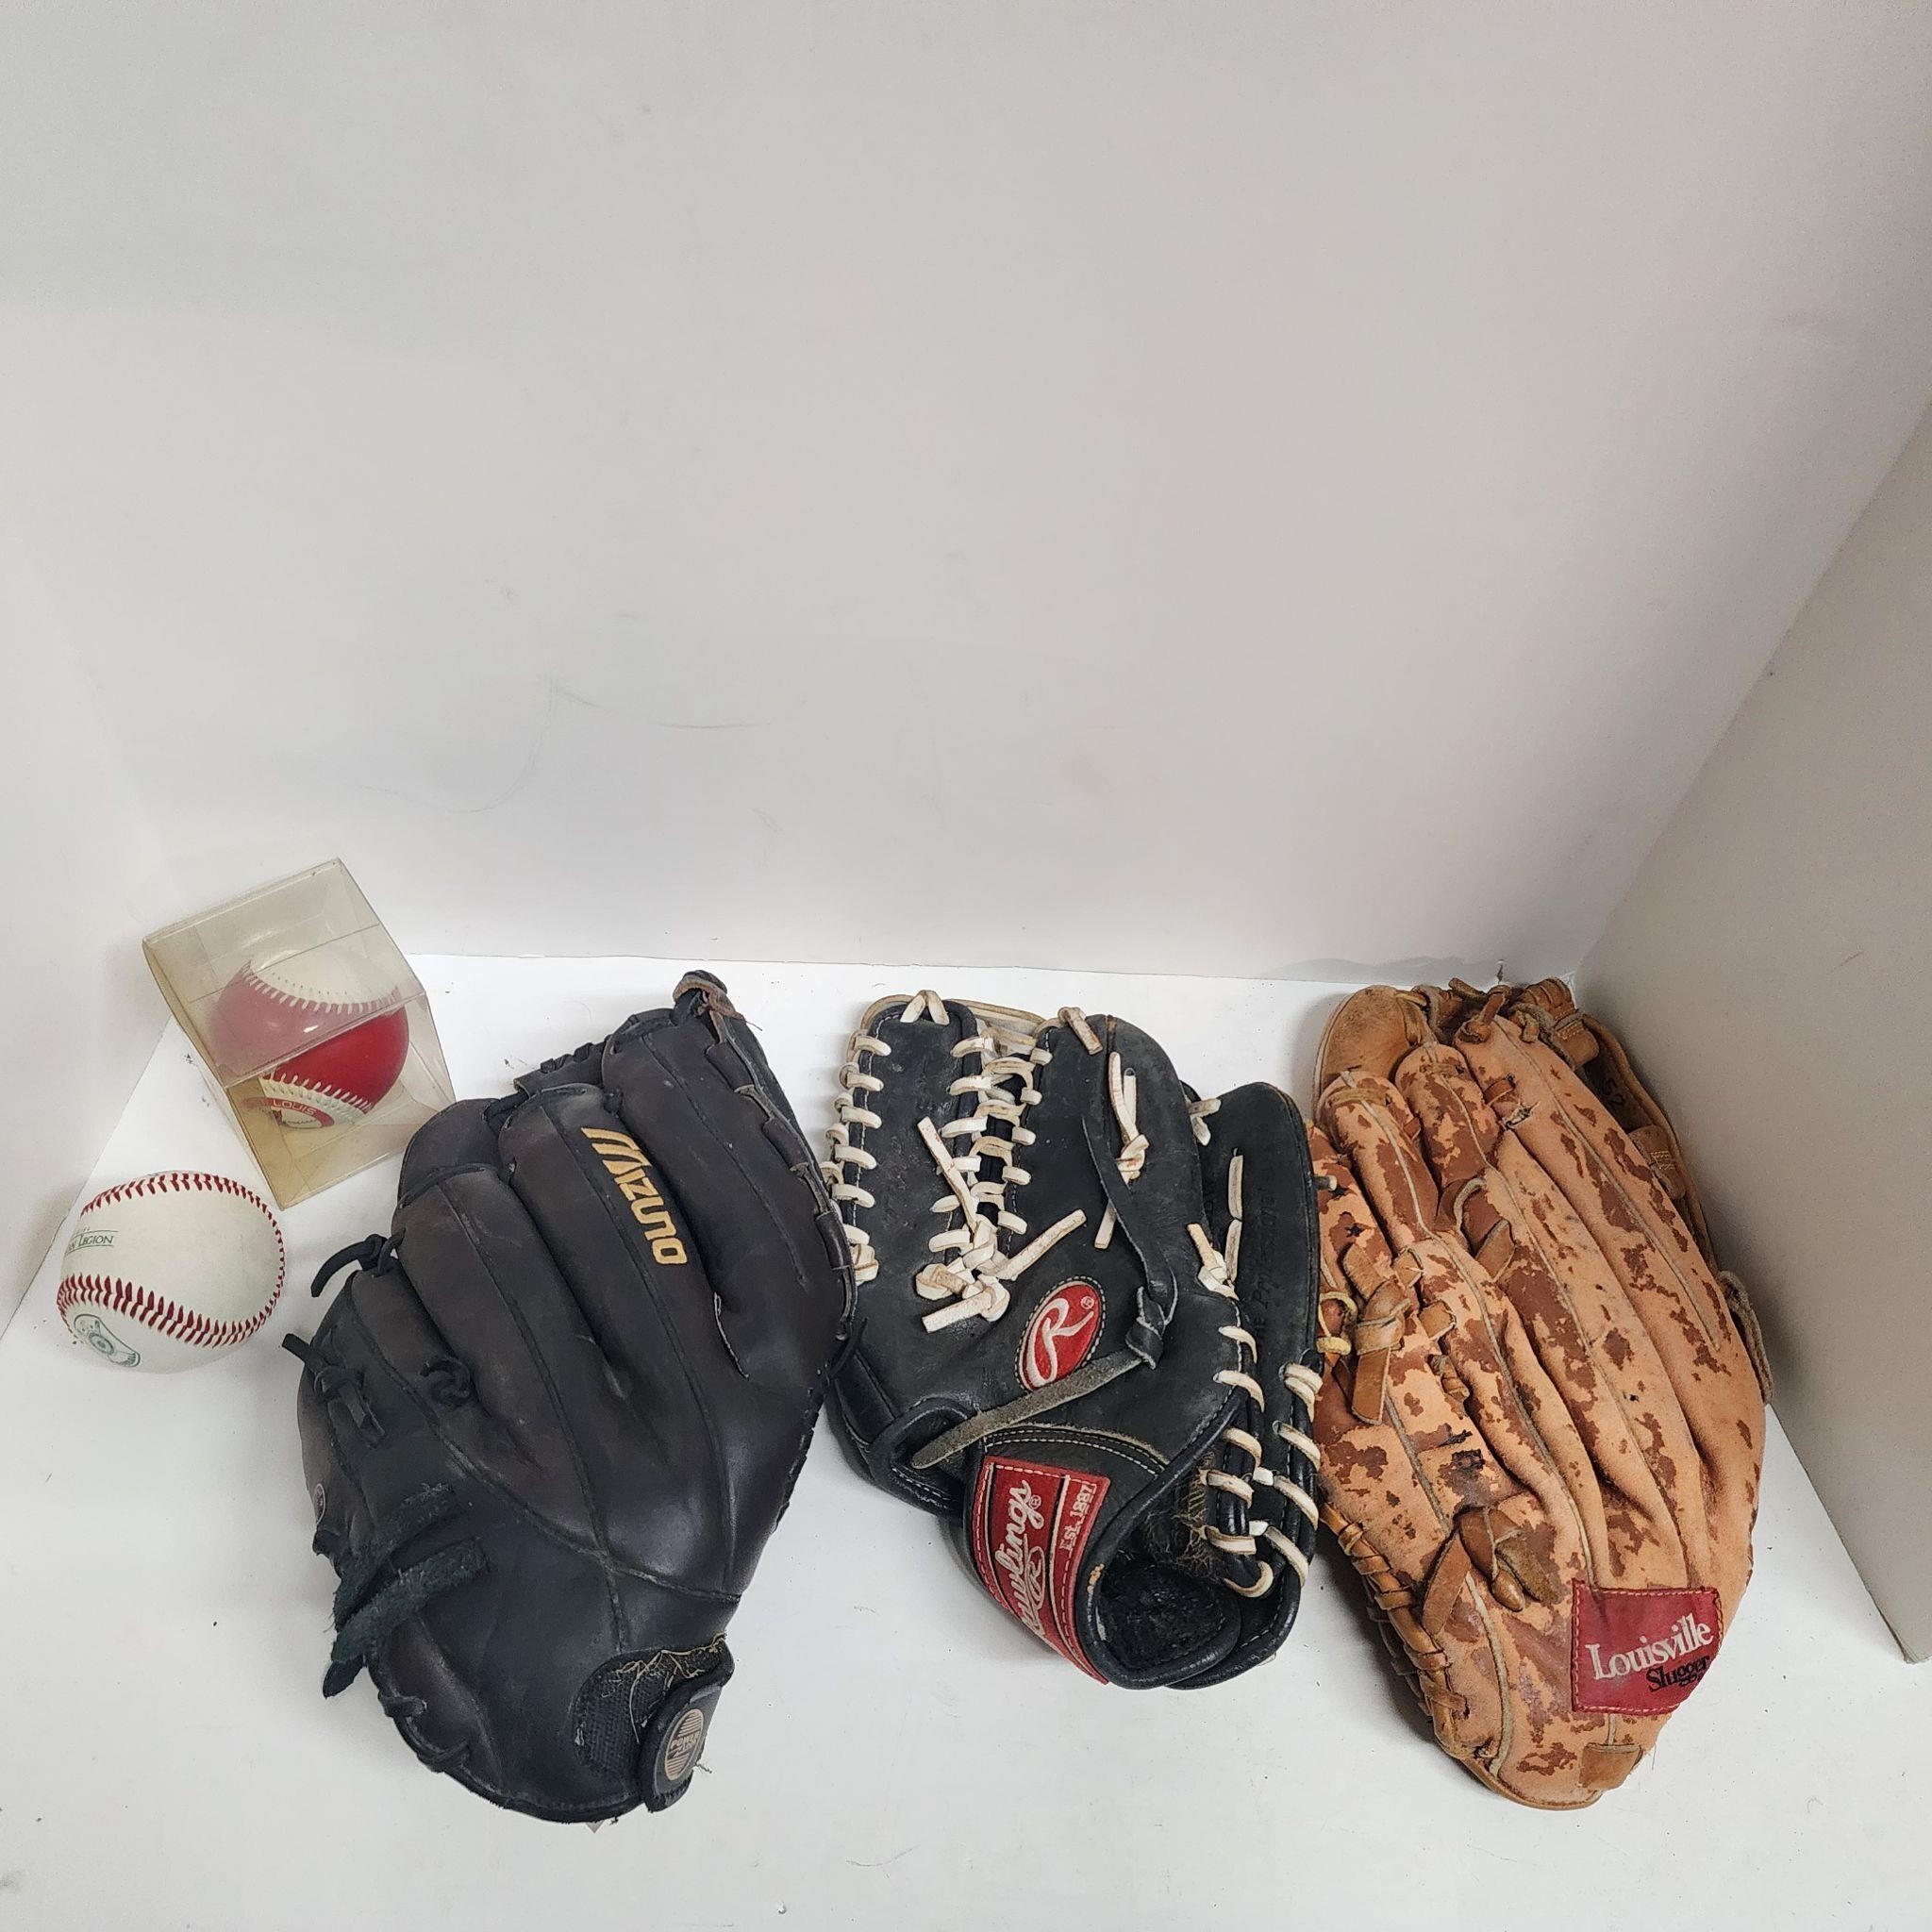 Baseball Gloves and more